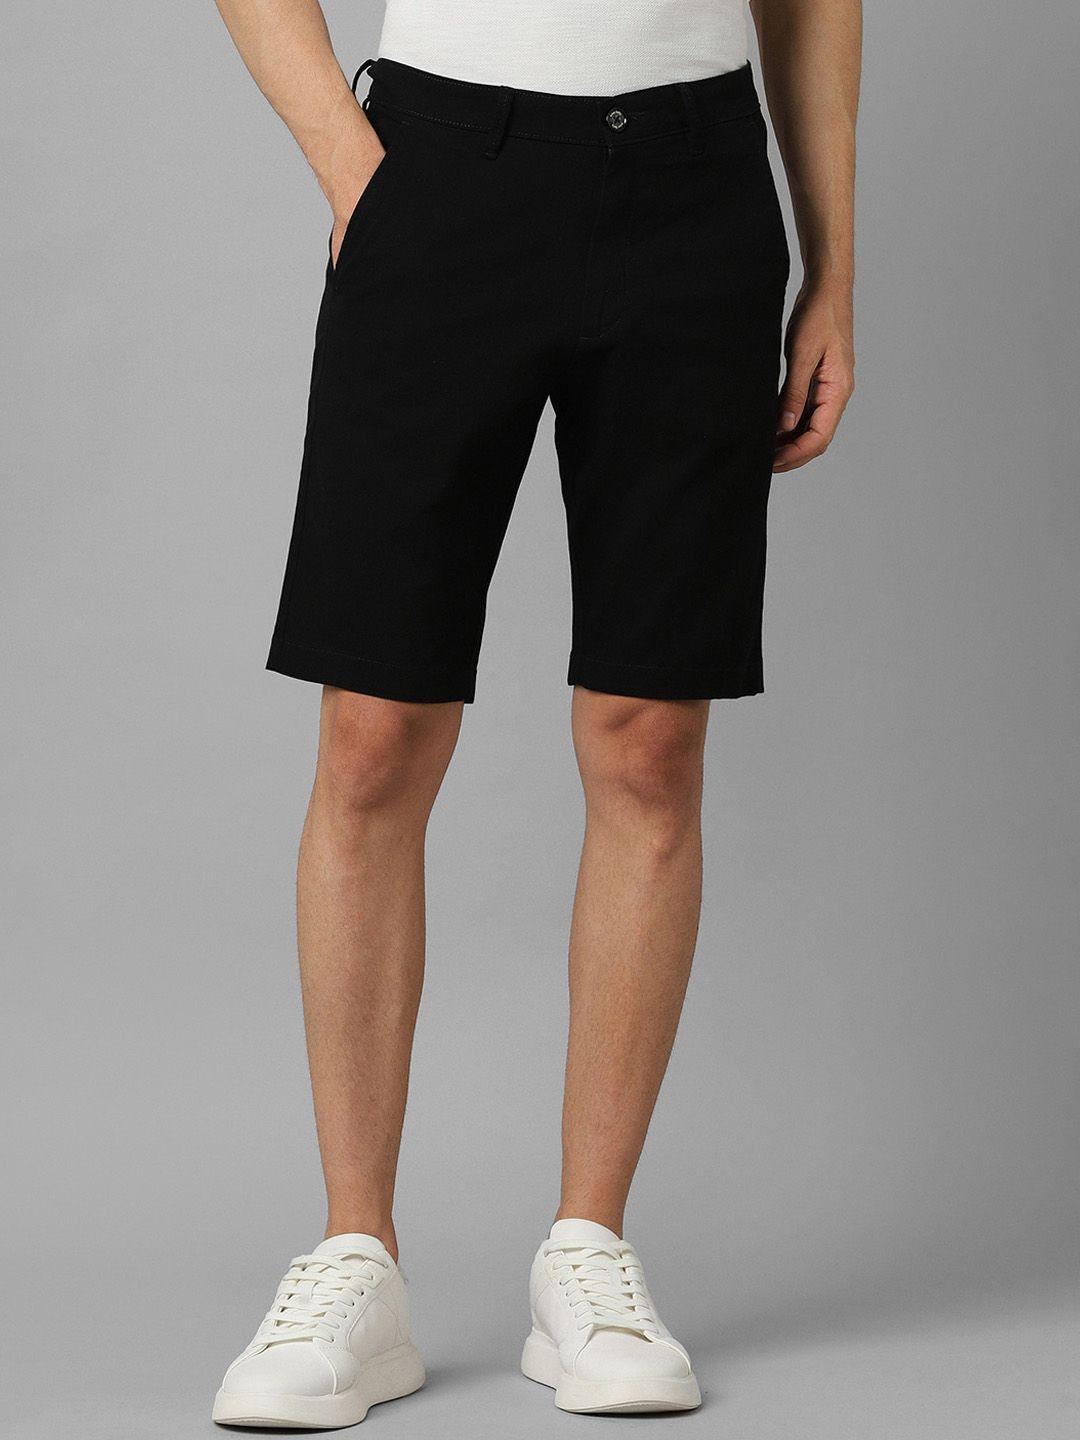 allen-solly-men-slim-fit-mid-rise-shorts